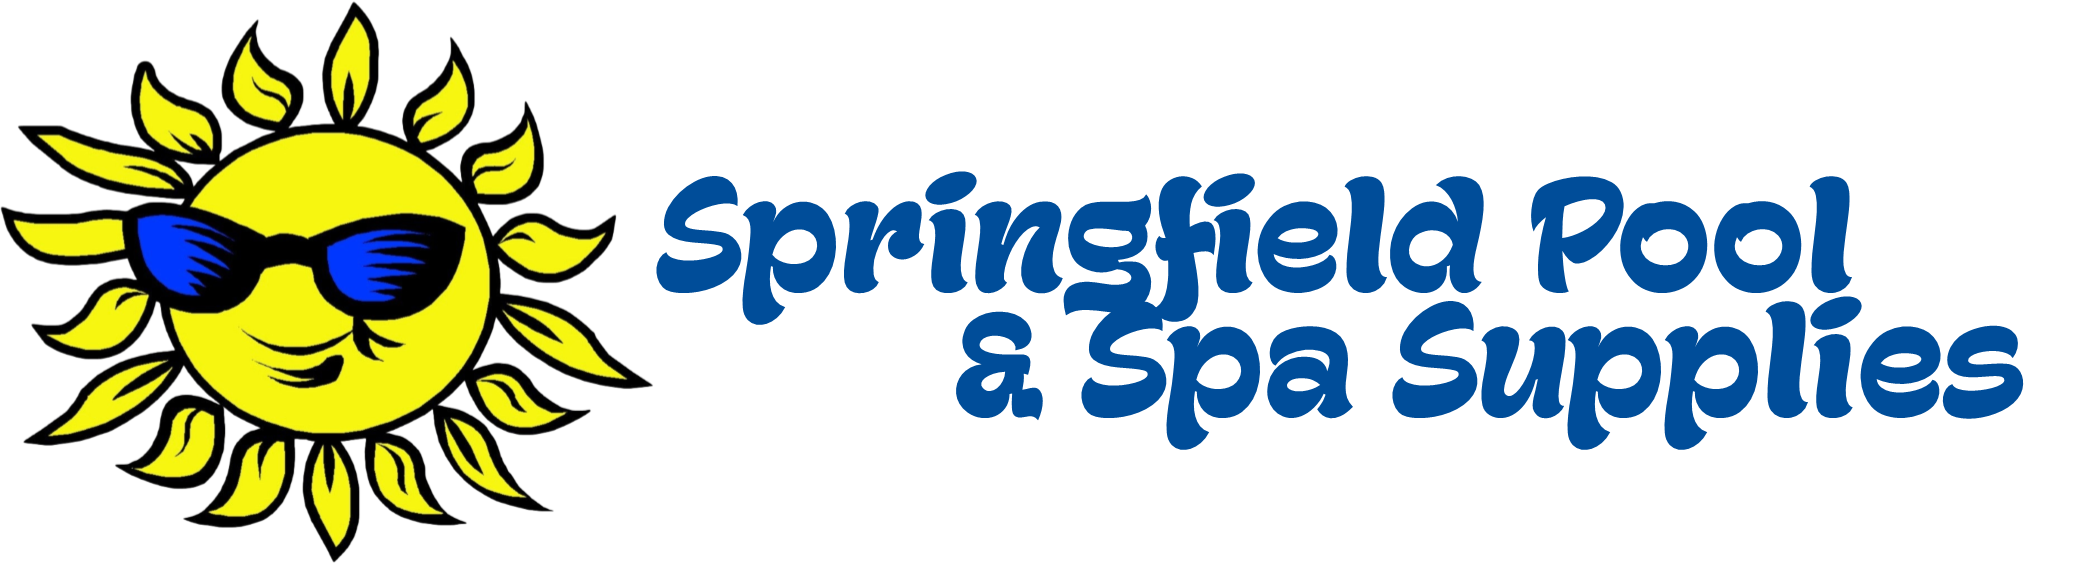 Springfield Pool & Spa Supplies